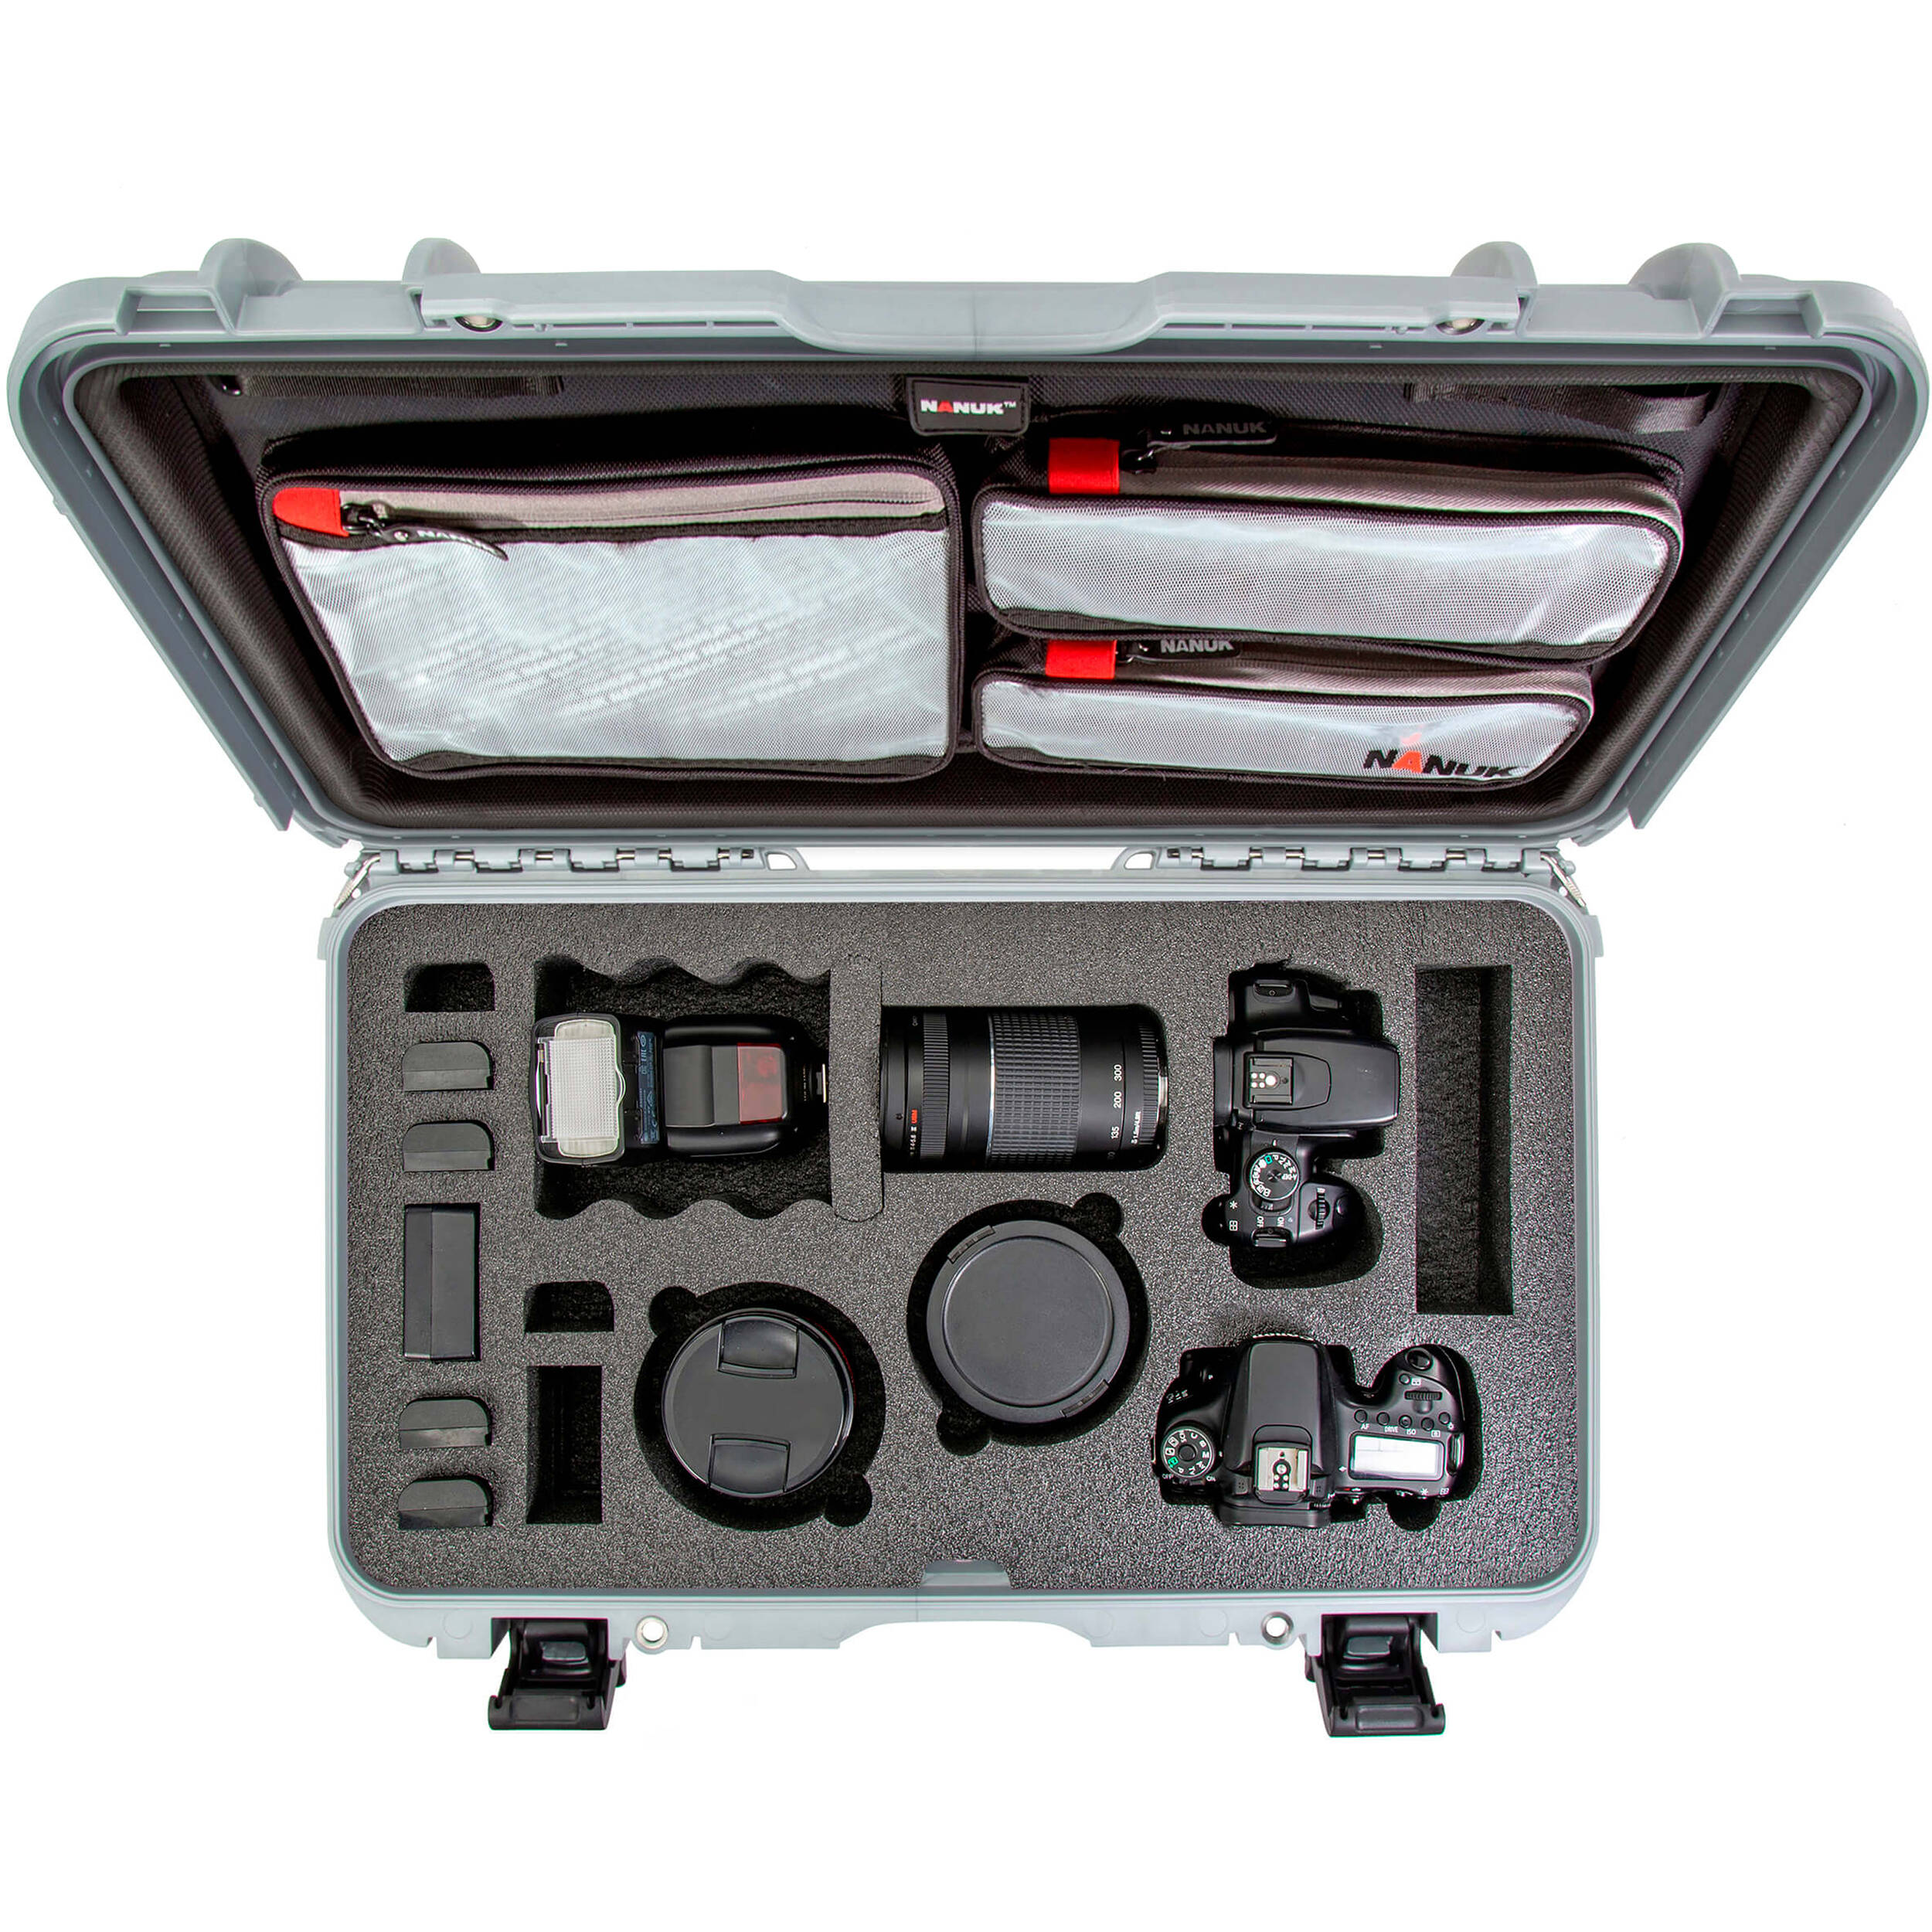 Nanuk 935 DSLR Camera Case with Lid Organizer (Silver)